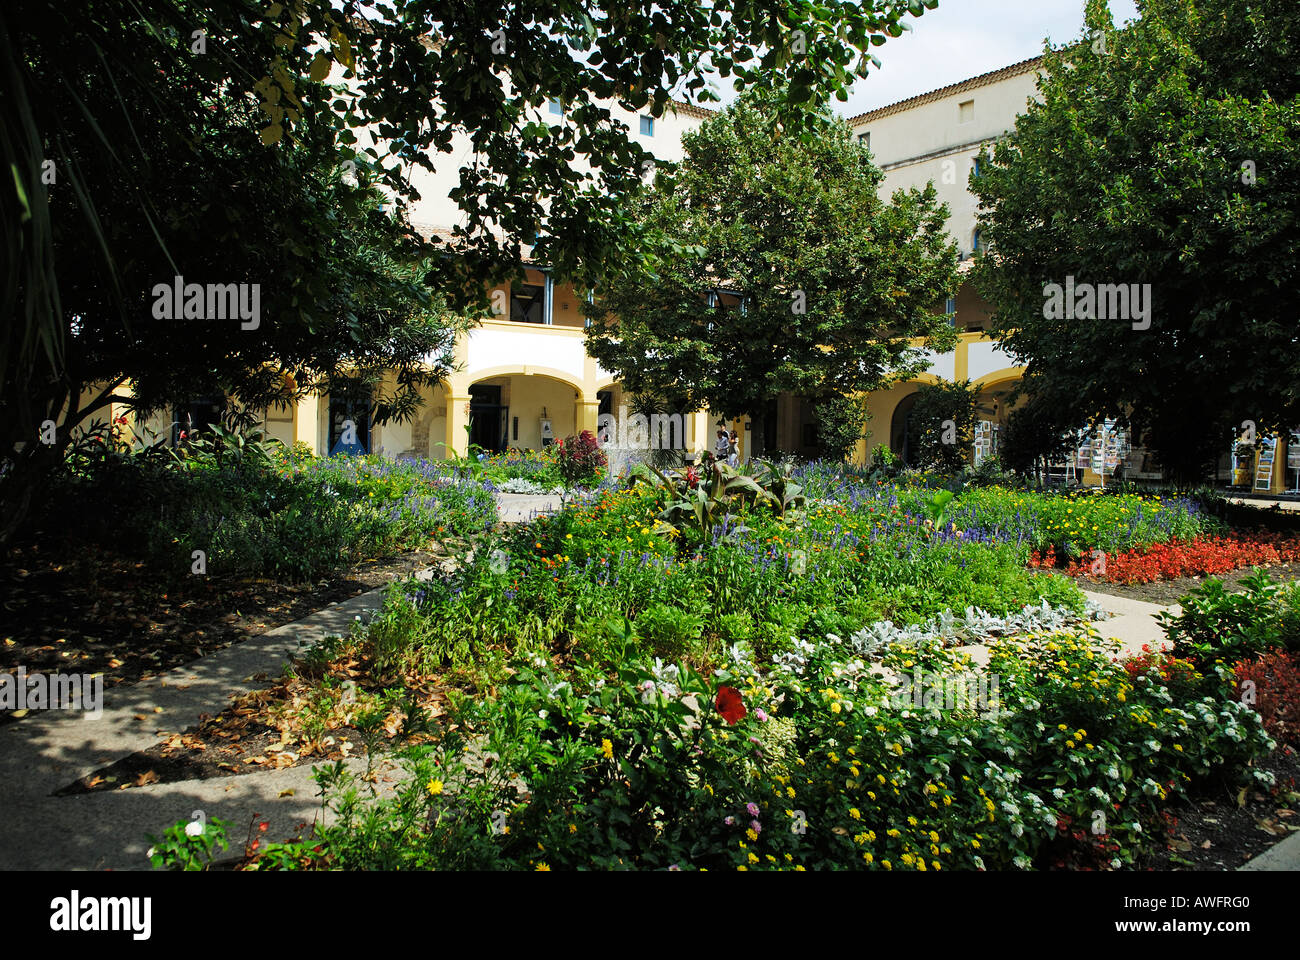 Espace Van Gogh, garden of the former hospital in Arles, France Stock Photo